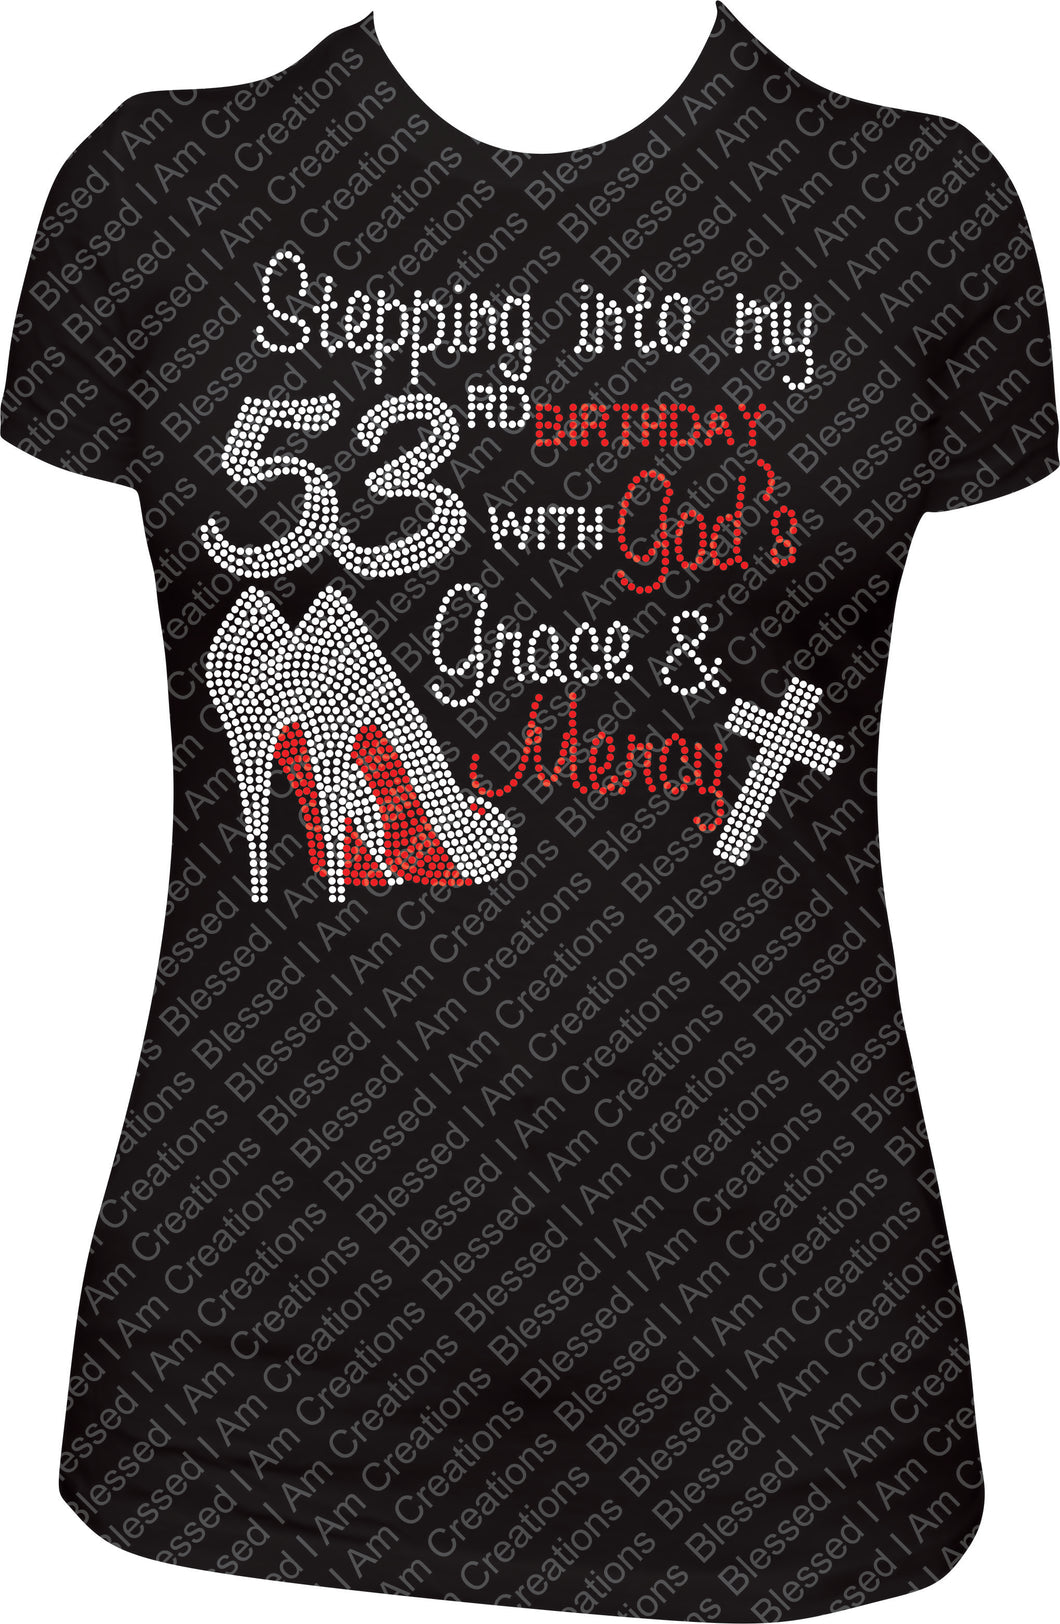 Stepping into my 53rd Birthday with God's Grace and Mercy Rhinestone Birthday Shirt